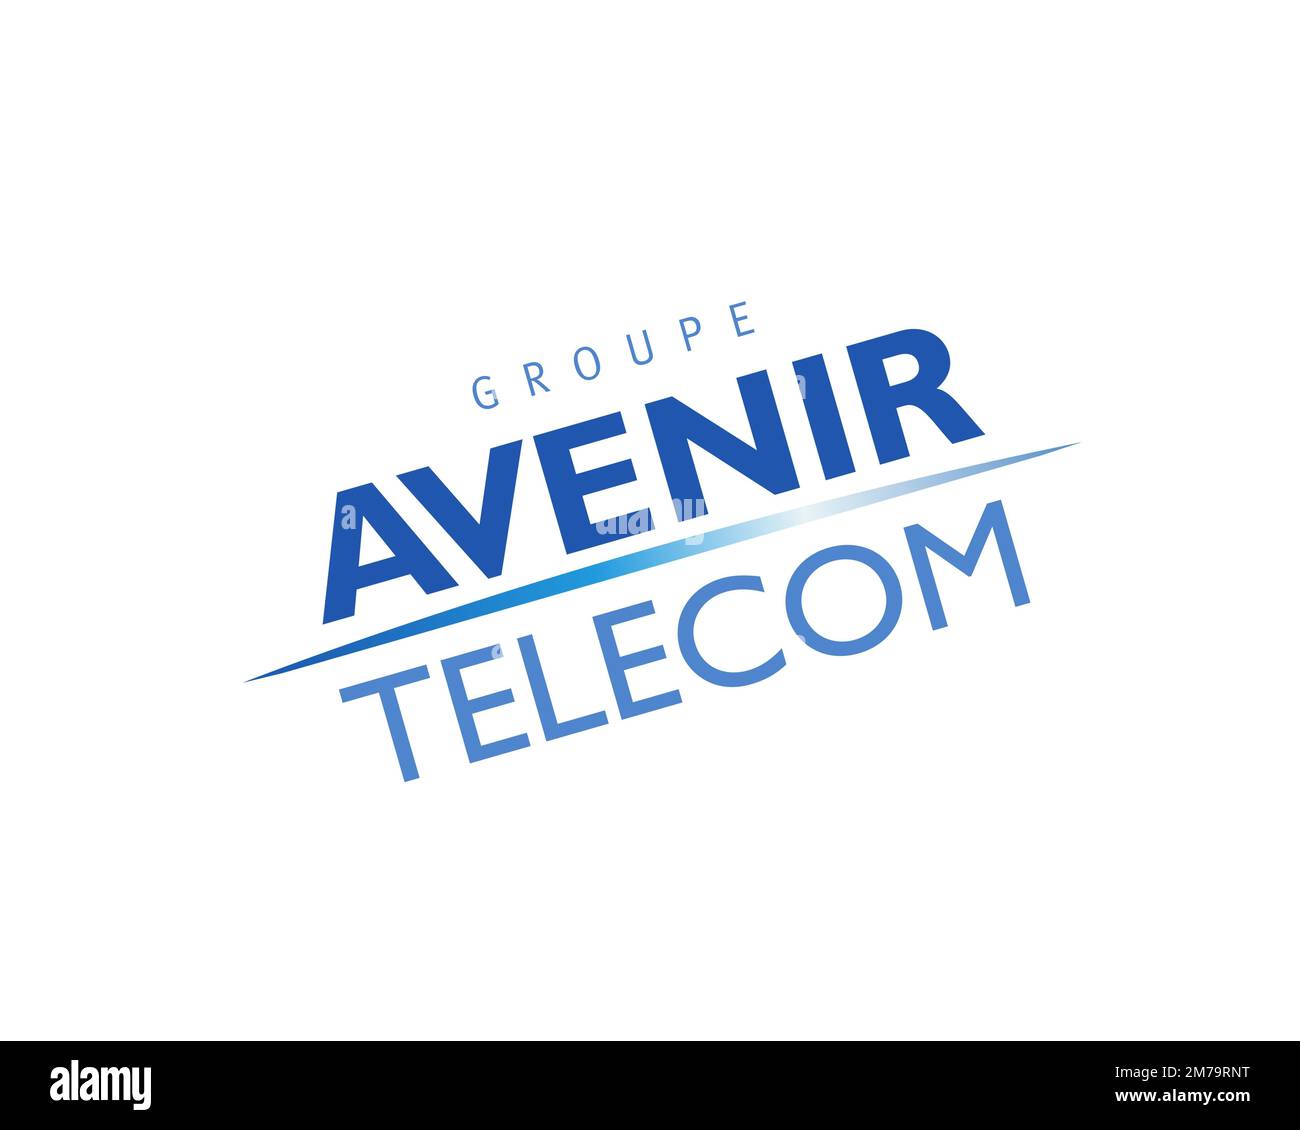 Avenir Telecom, rotated logo, white background Stock Photo - Alamy